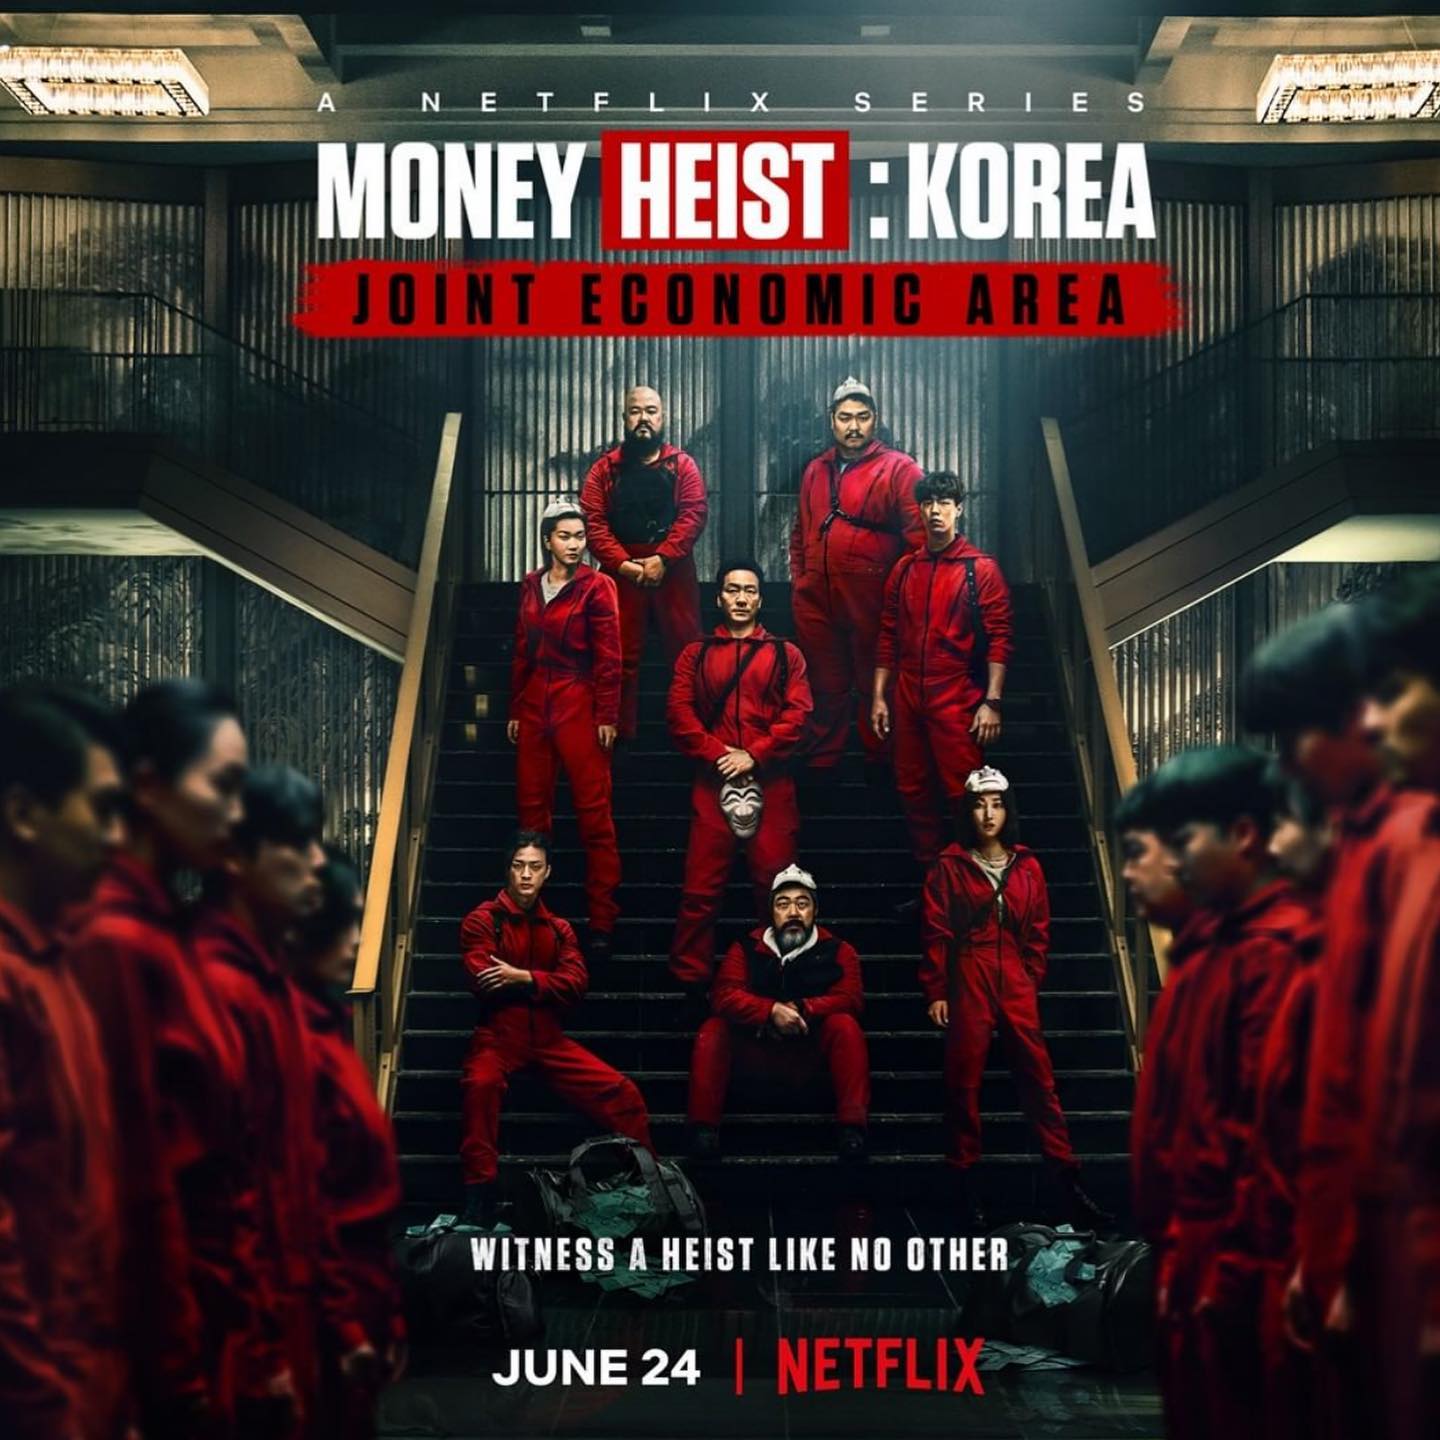 Netflix poster for ‘Money Heist: Korea – Joint Economic Area’ showing the main cast